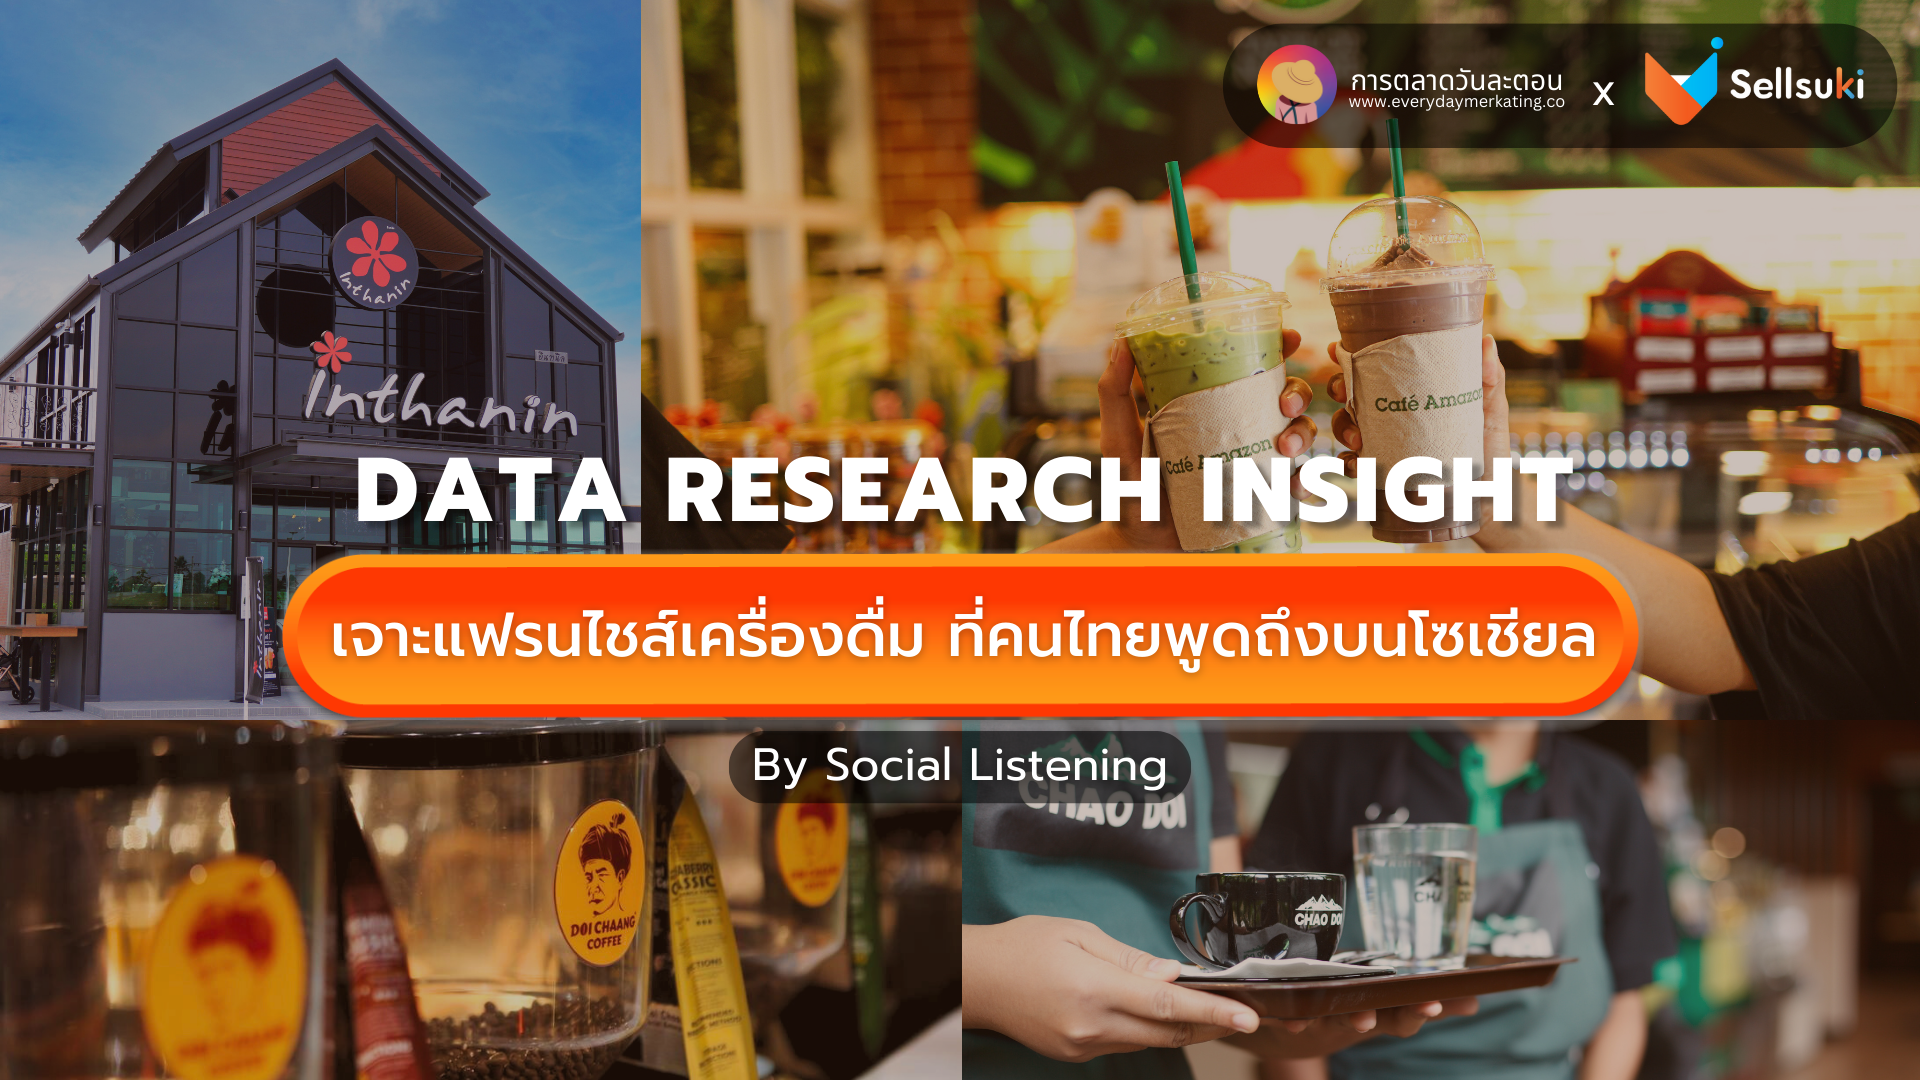 Data Research Insight ธุรกิจ แฟรนไชส์ เครื่องดื่มในไทย